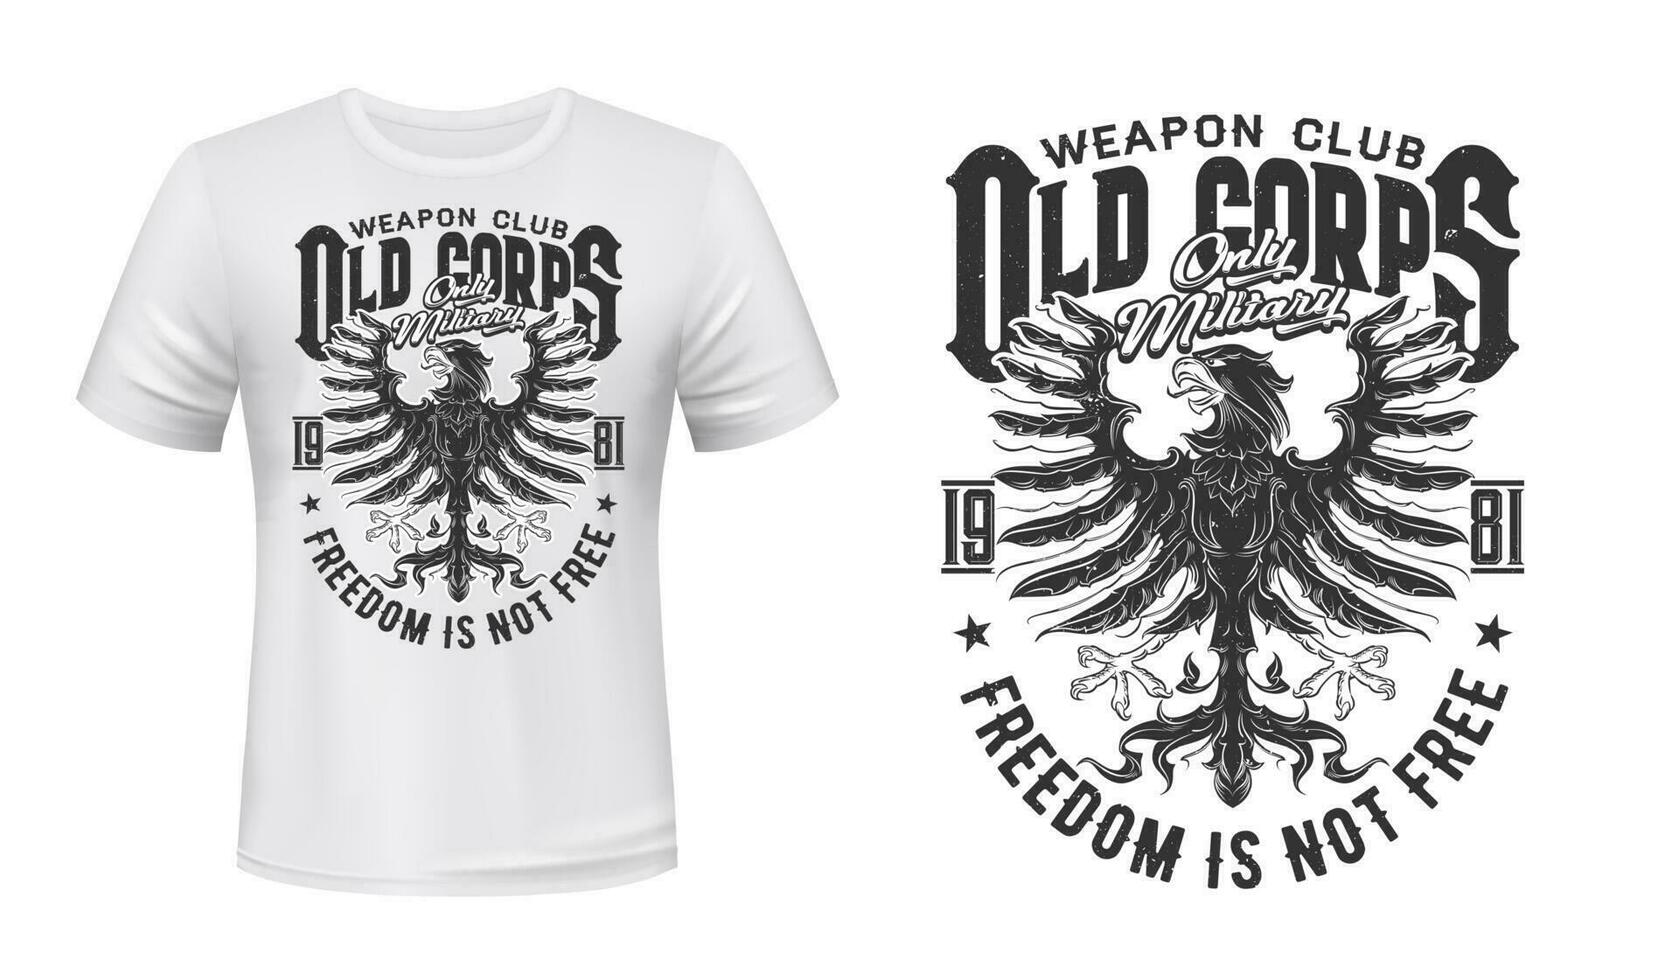 Heraldic eagle t-shirt print mockup, military club vector